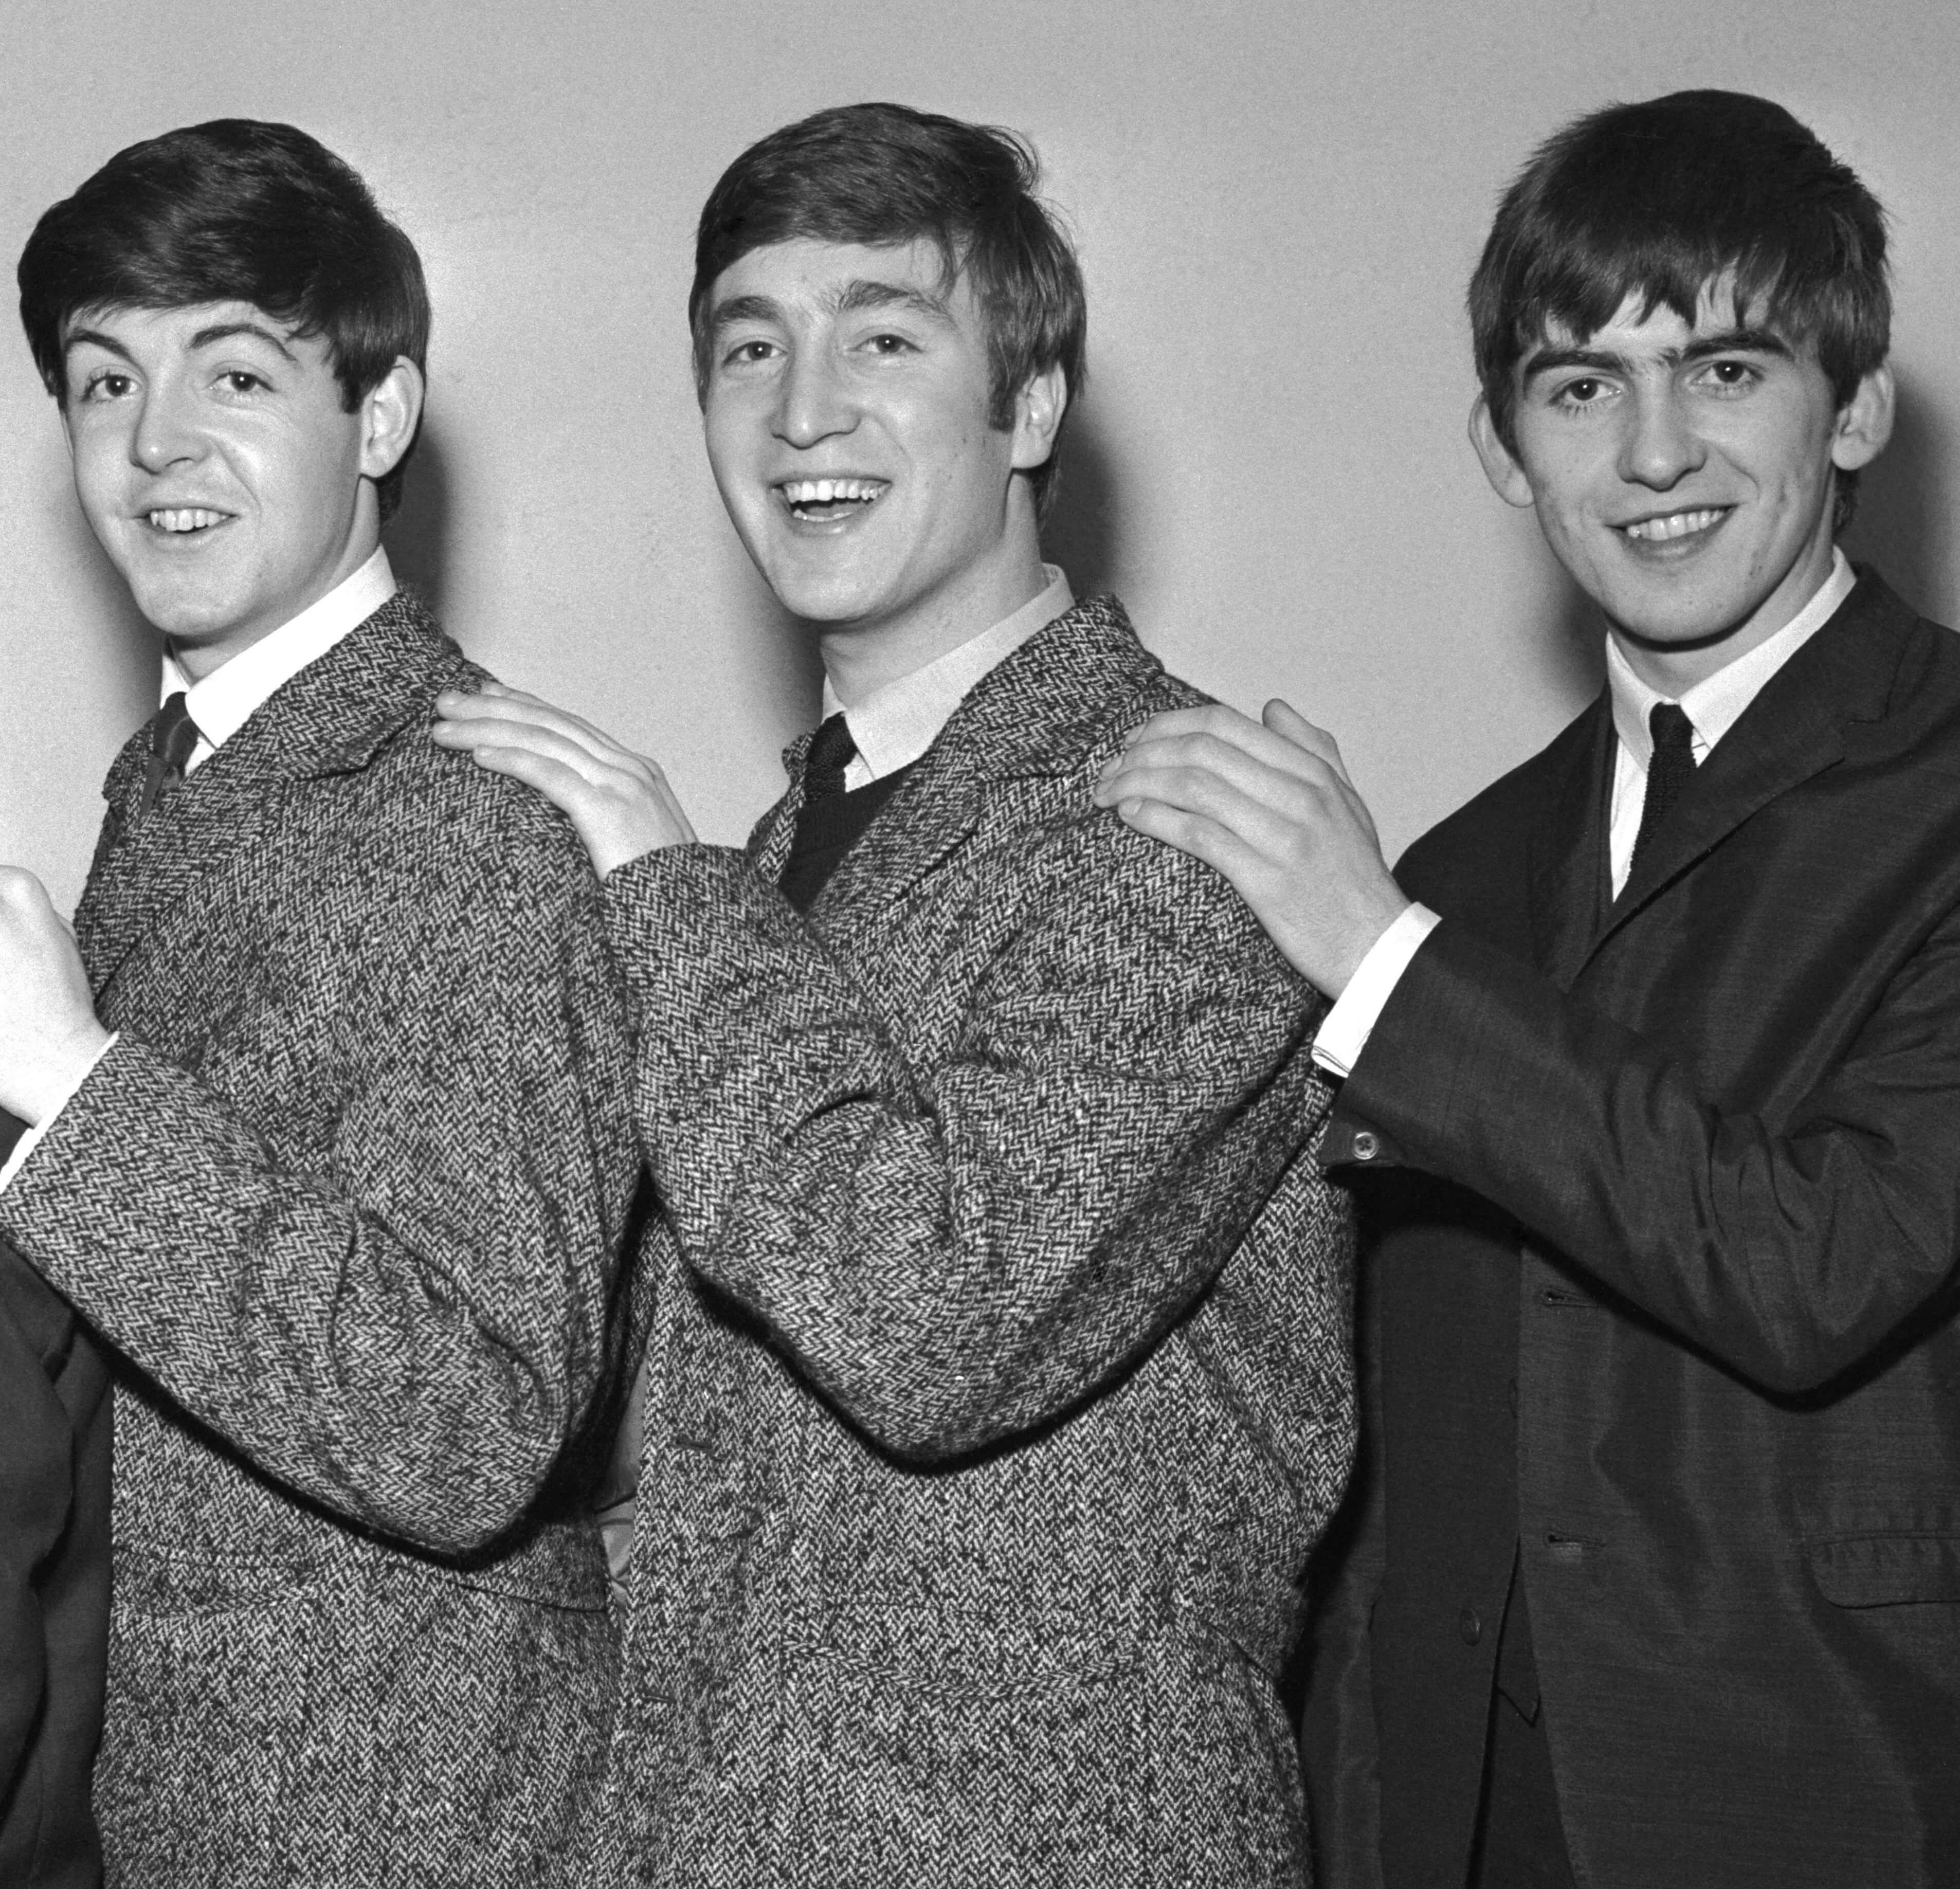 Paul McCartney, John Lennon, and George Harrison during The Beatles' "Can't Buy Me Love" era